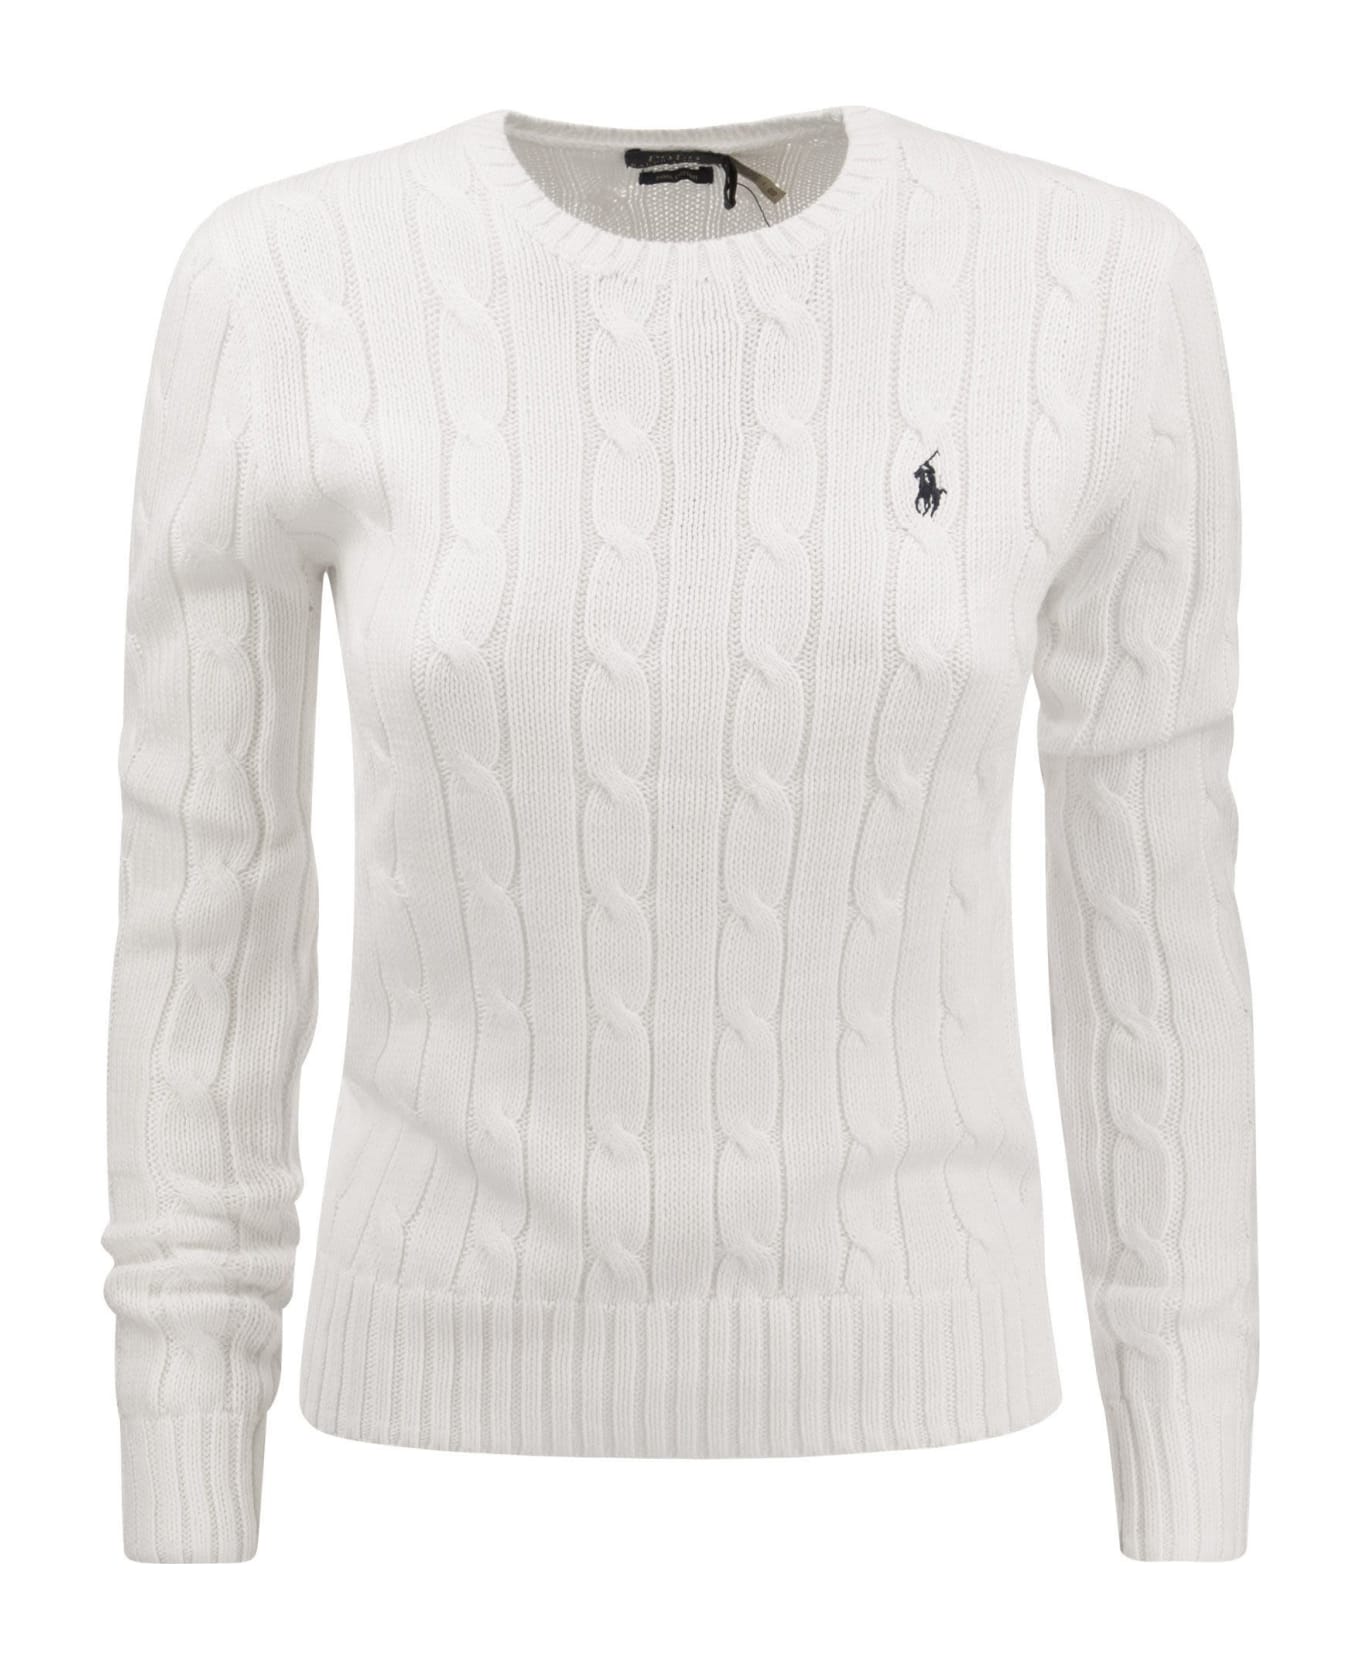 Polo Ralph Lauren Sweater With Pony - Bianco